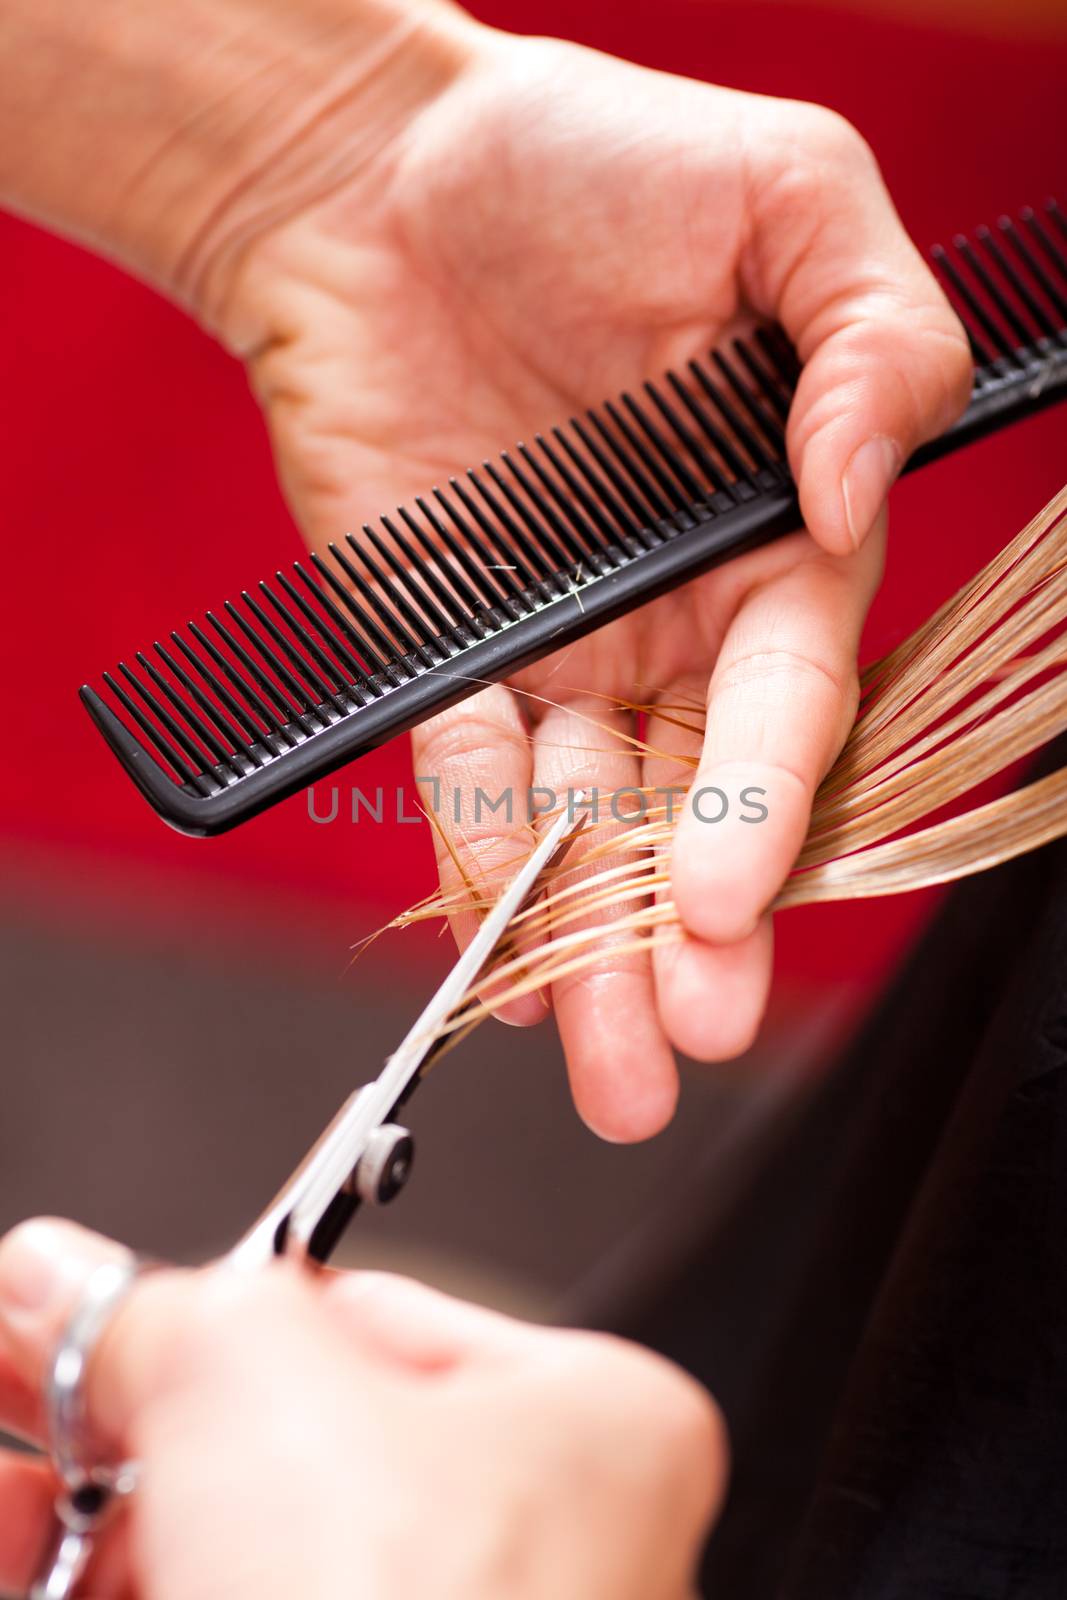 Hairdresser cut hair of a blonde woman / close-up